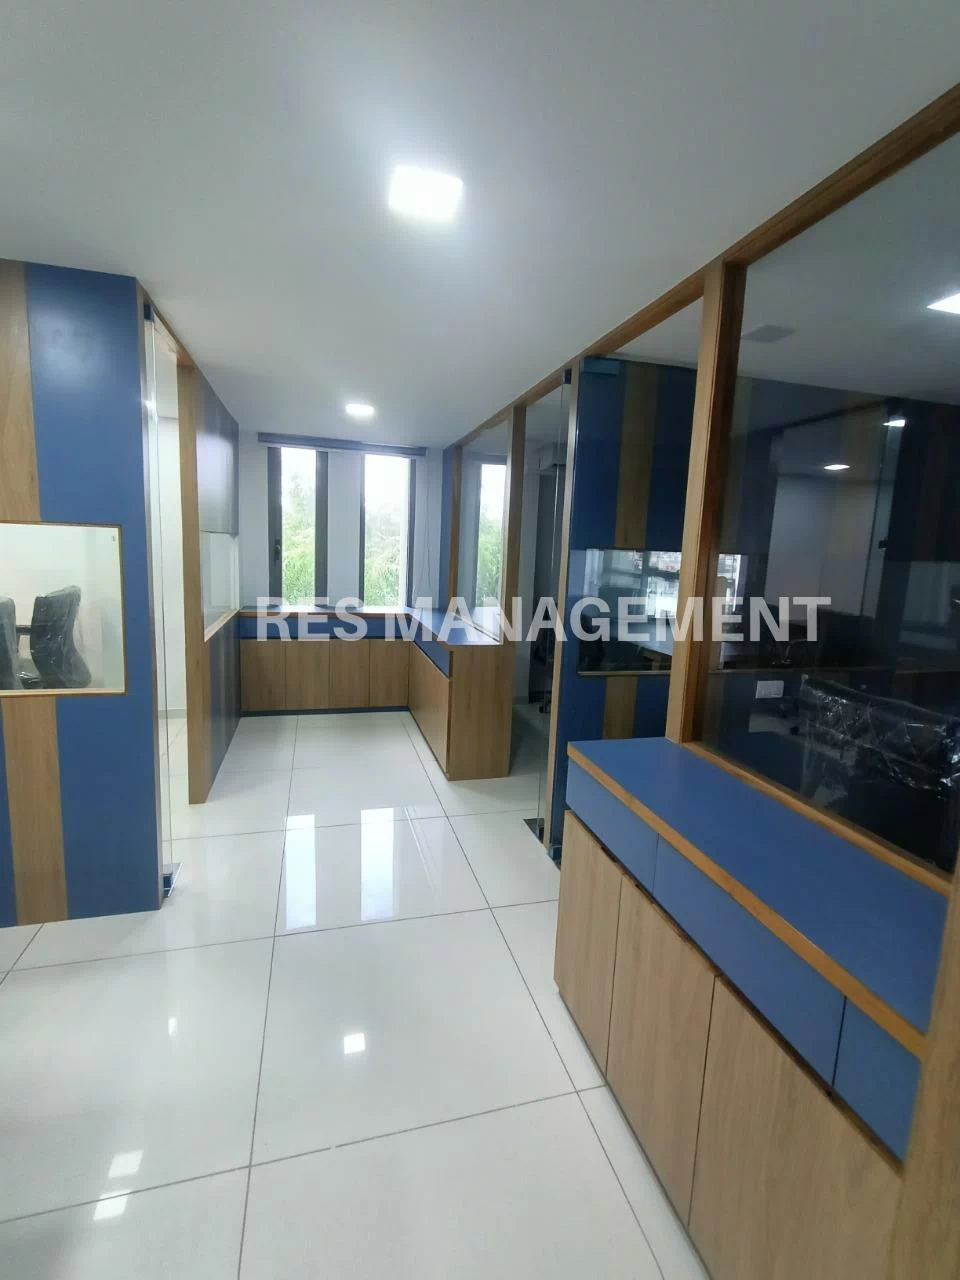 Office Space for Rent in Priviara, Nehrunagar, Ahmedabad